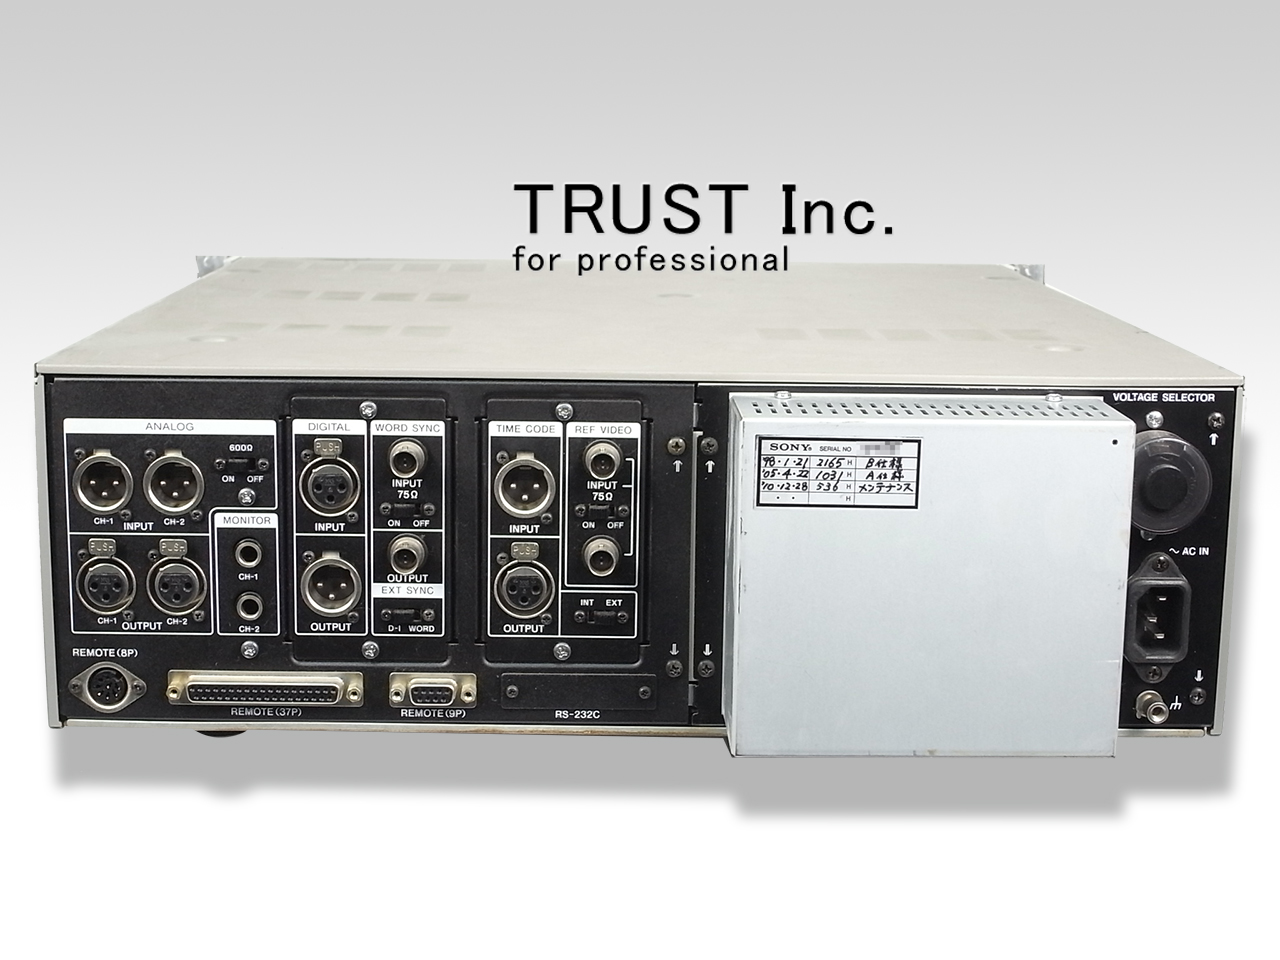 PCM-7050 / DAT Recorder【中古放送用・業務用 映像機器・音響機器の店